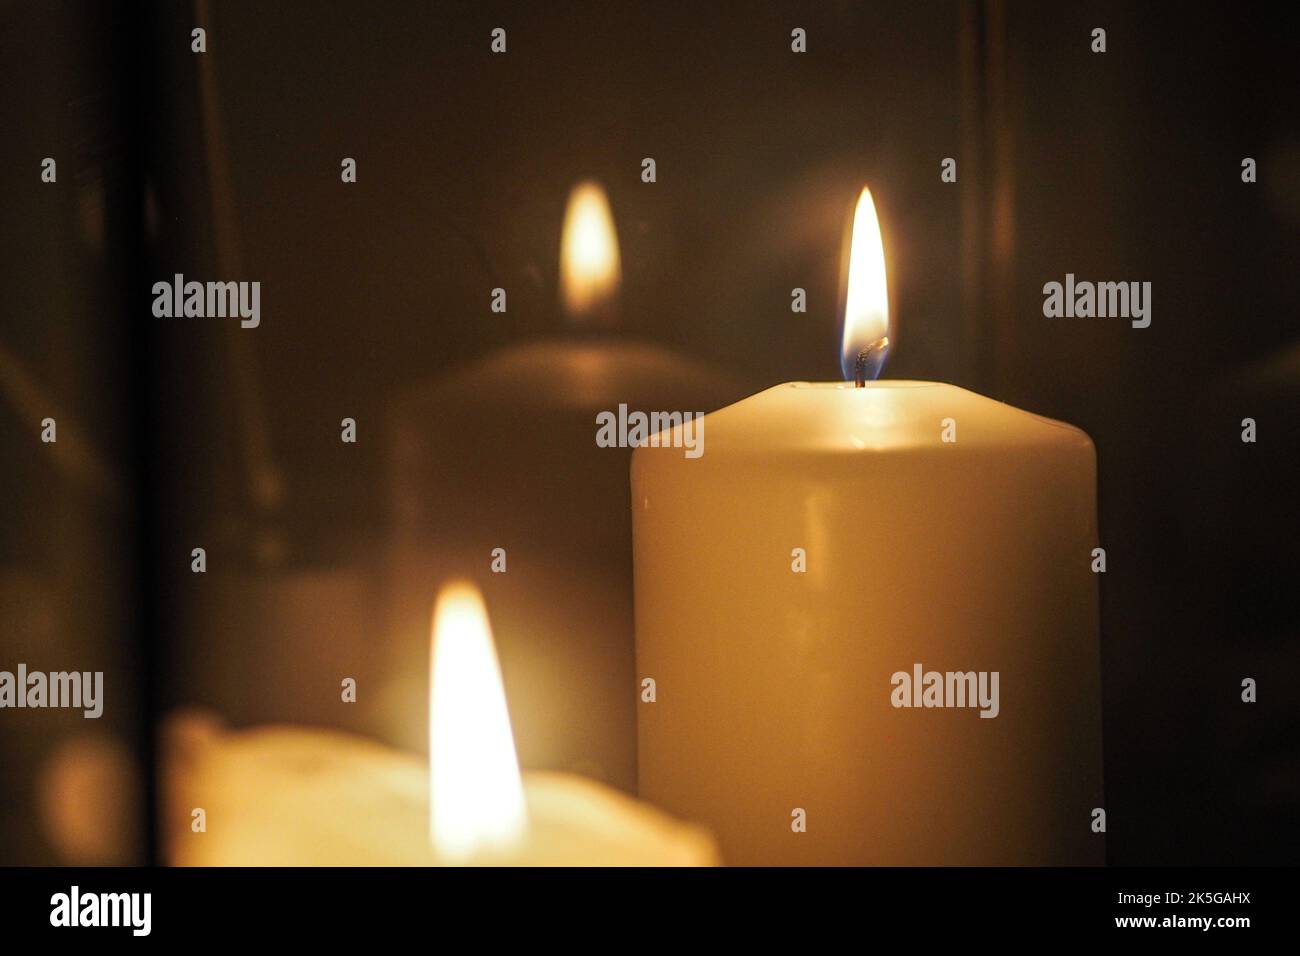 Un primo piano di candele accese riflesse in un portacandele geometrico in filo metallico in una stanza buia Foto Stock